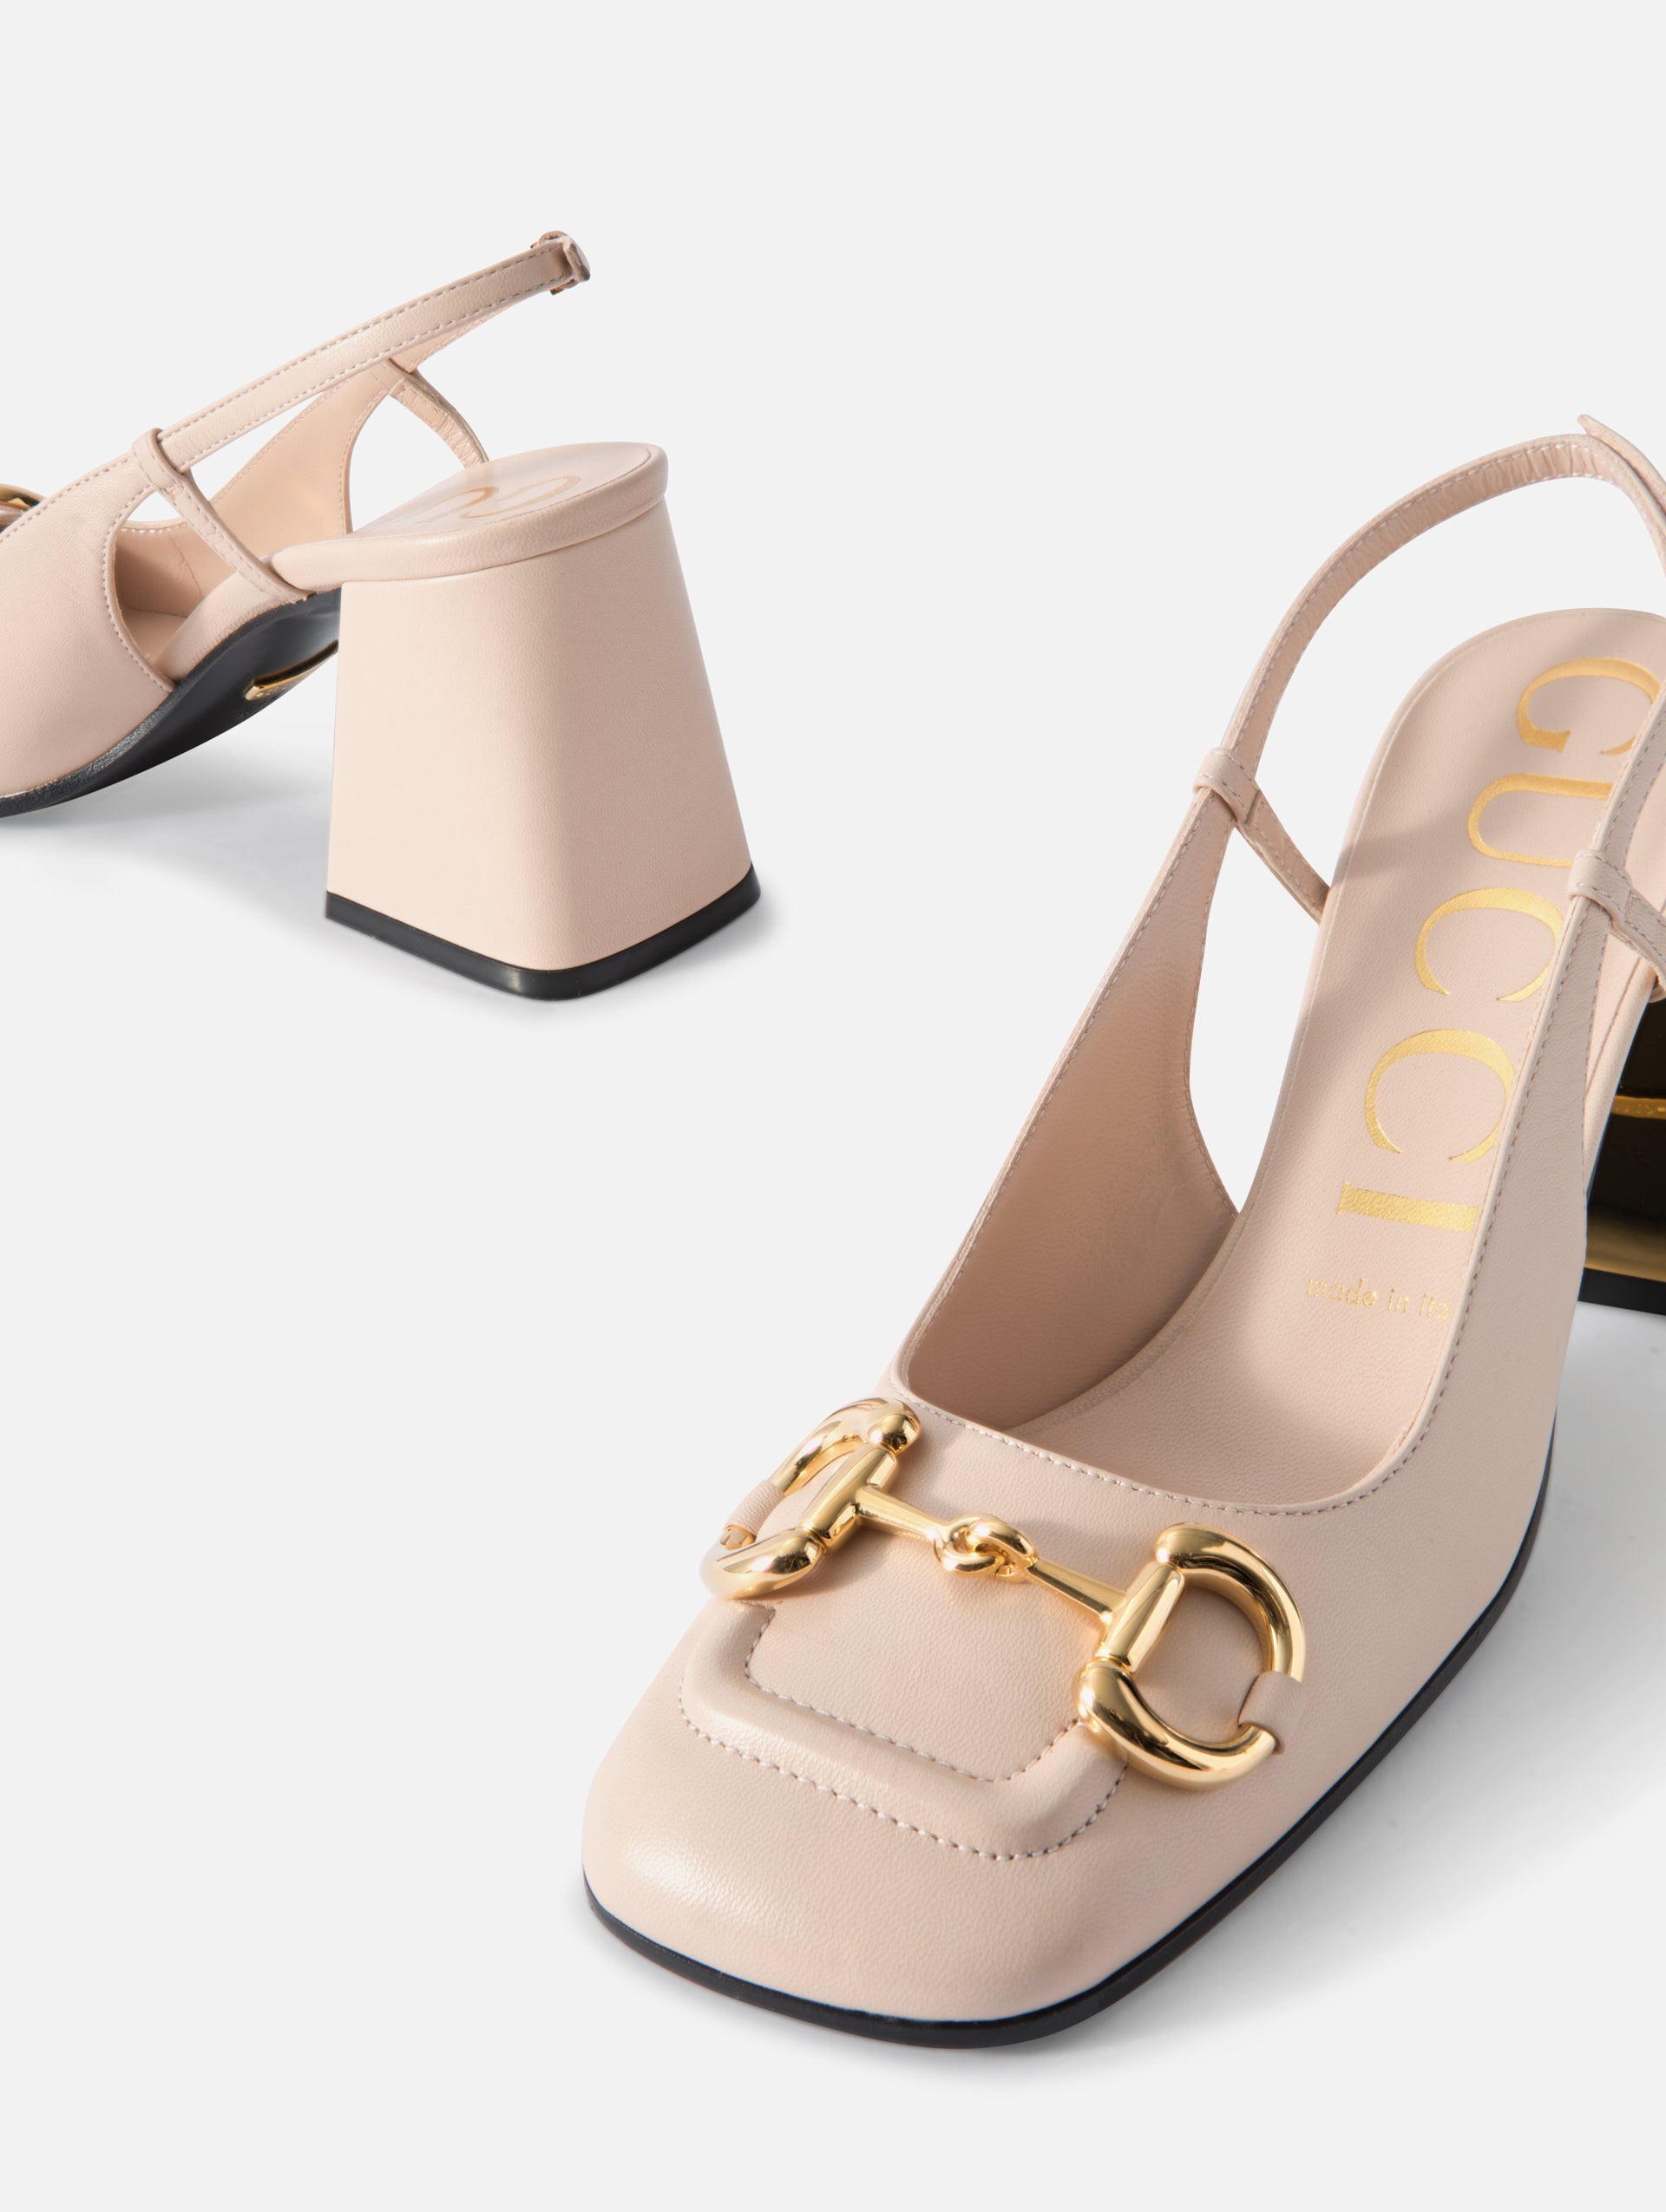 Gucci Shoes Heels Fashion Designer Bronze Peep Open Toe Pumps 39.5 Size US  9.5 | eBay